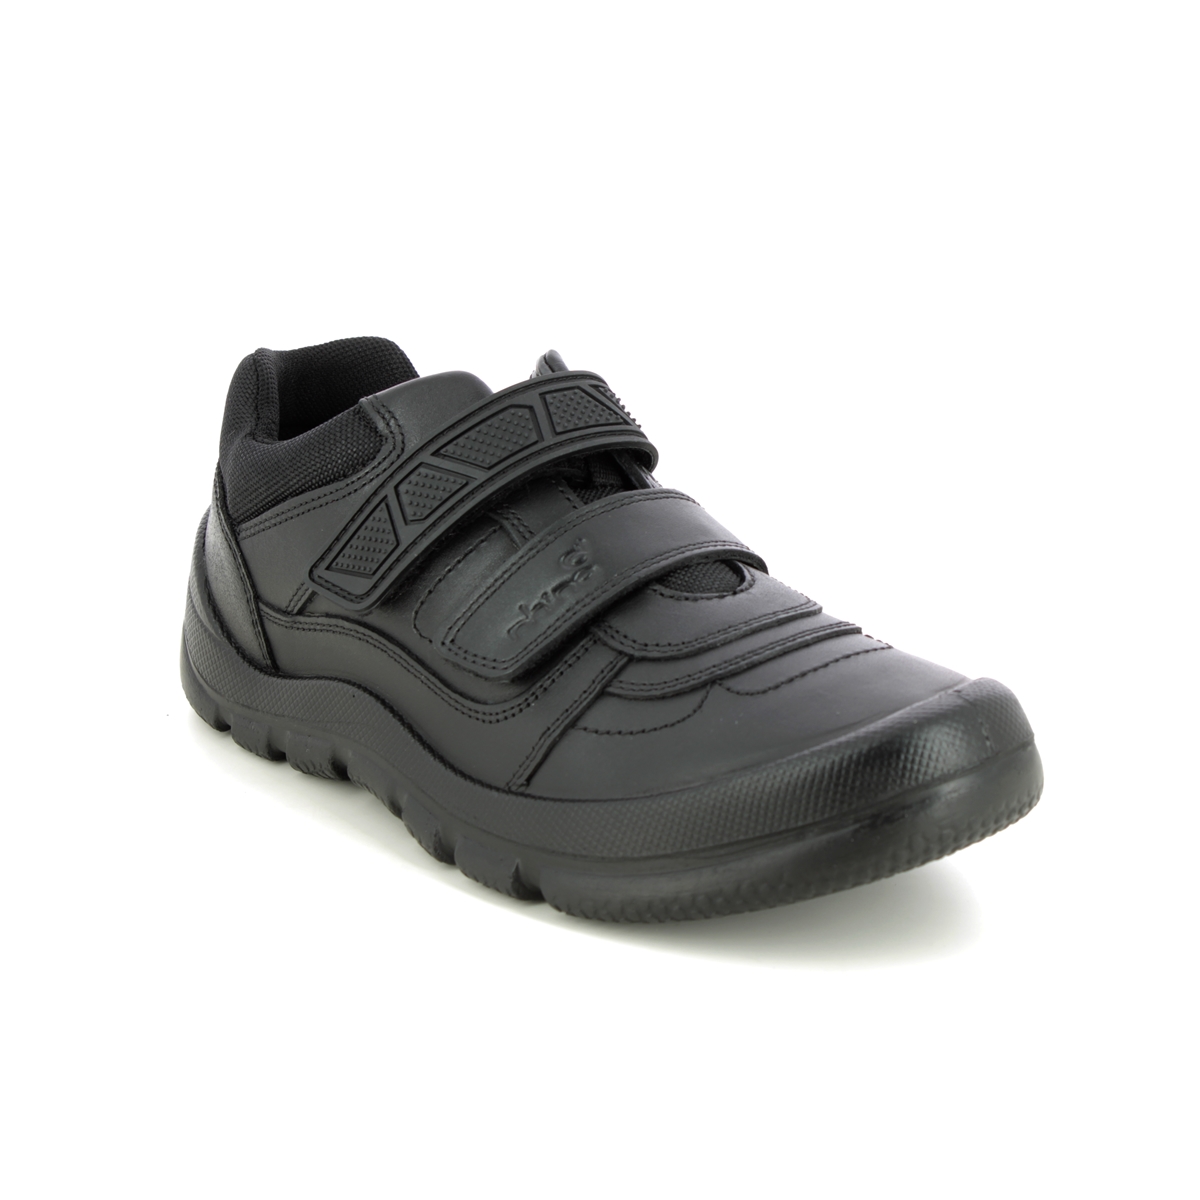 Start Rite - Rhino Warrior In Black Leather 8237-76F In Size 3 In Plain Black Leather For School Boys Shoes  In Black Leather For kids